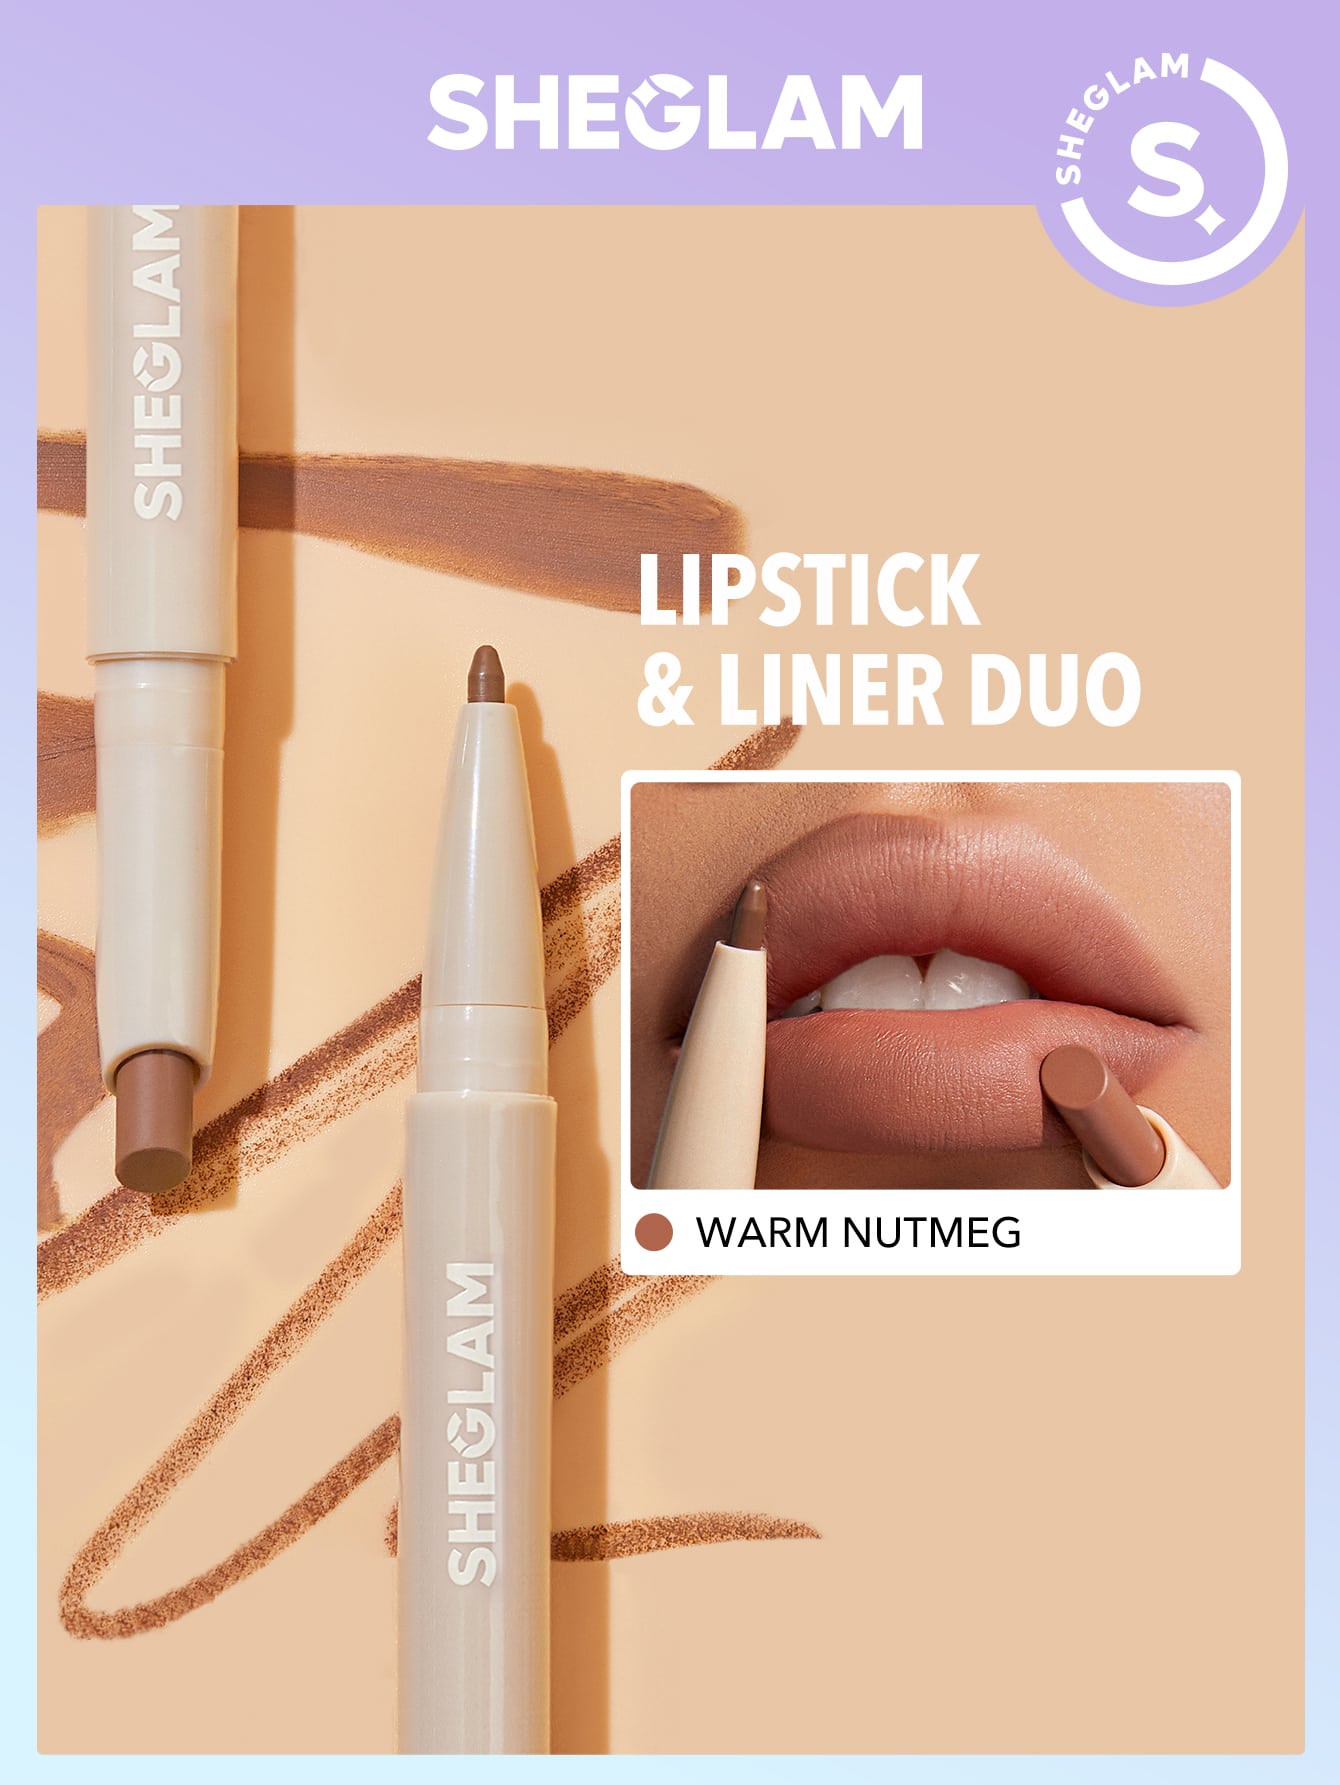 SHEGLAM Glam 101 Lipstick Liner Duo Soft Chai